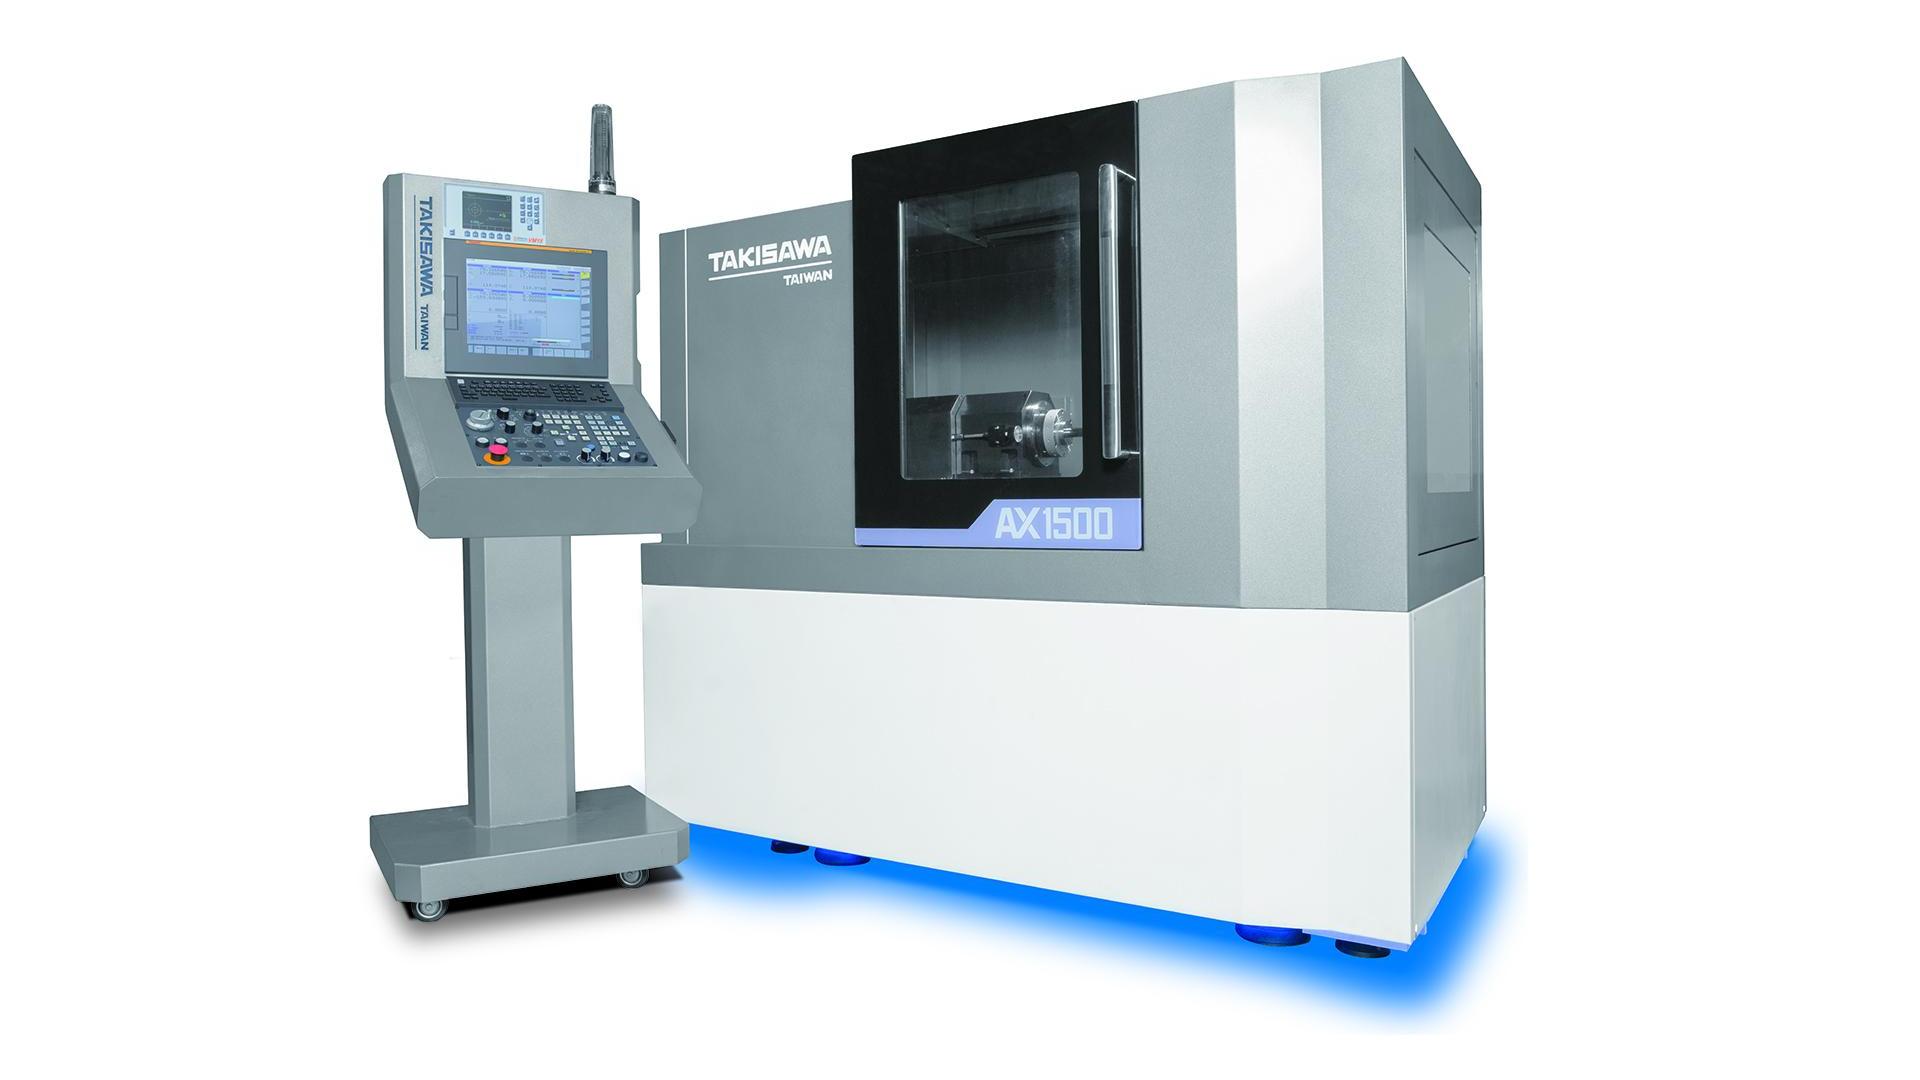 AX-1500 ultra-precision lathe machine